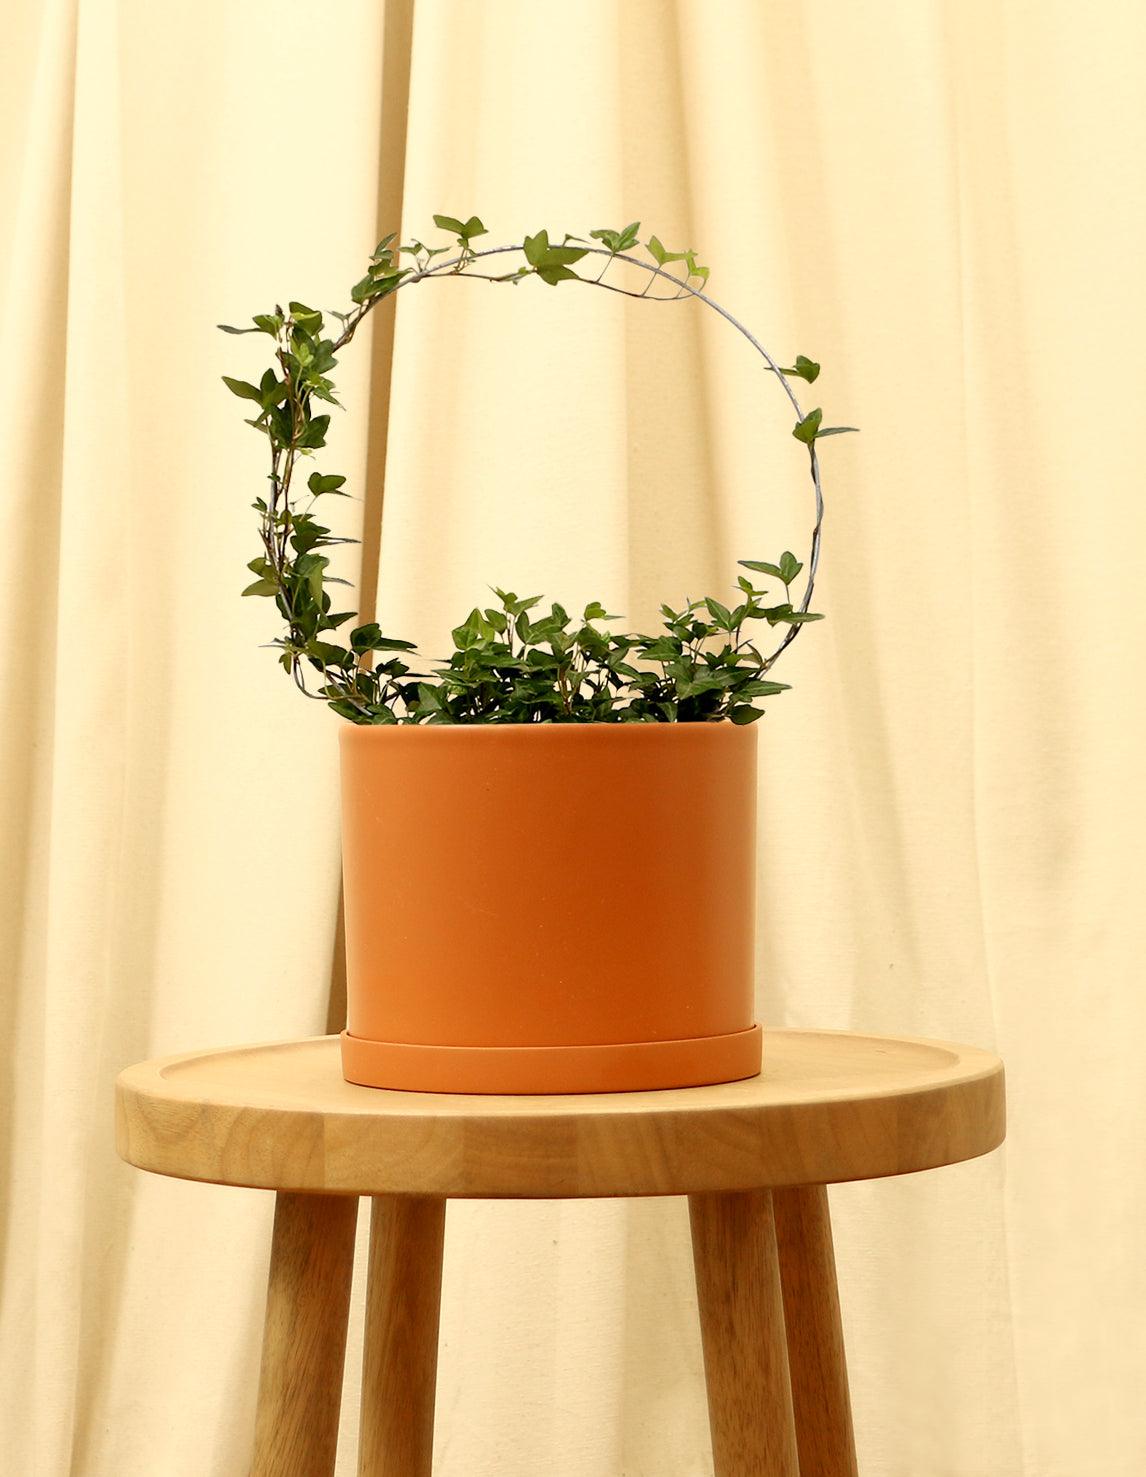 Medium English Ivy Plant in orange pot.